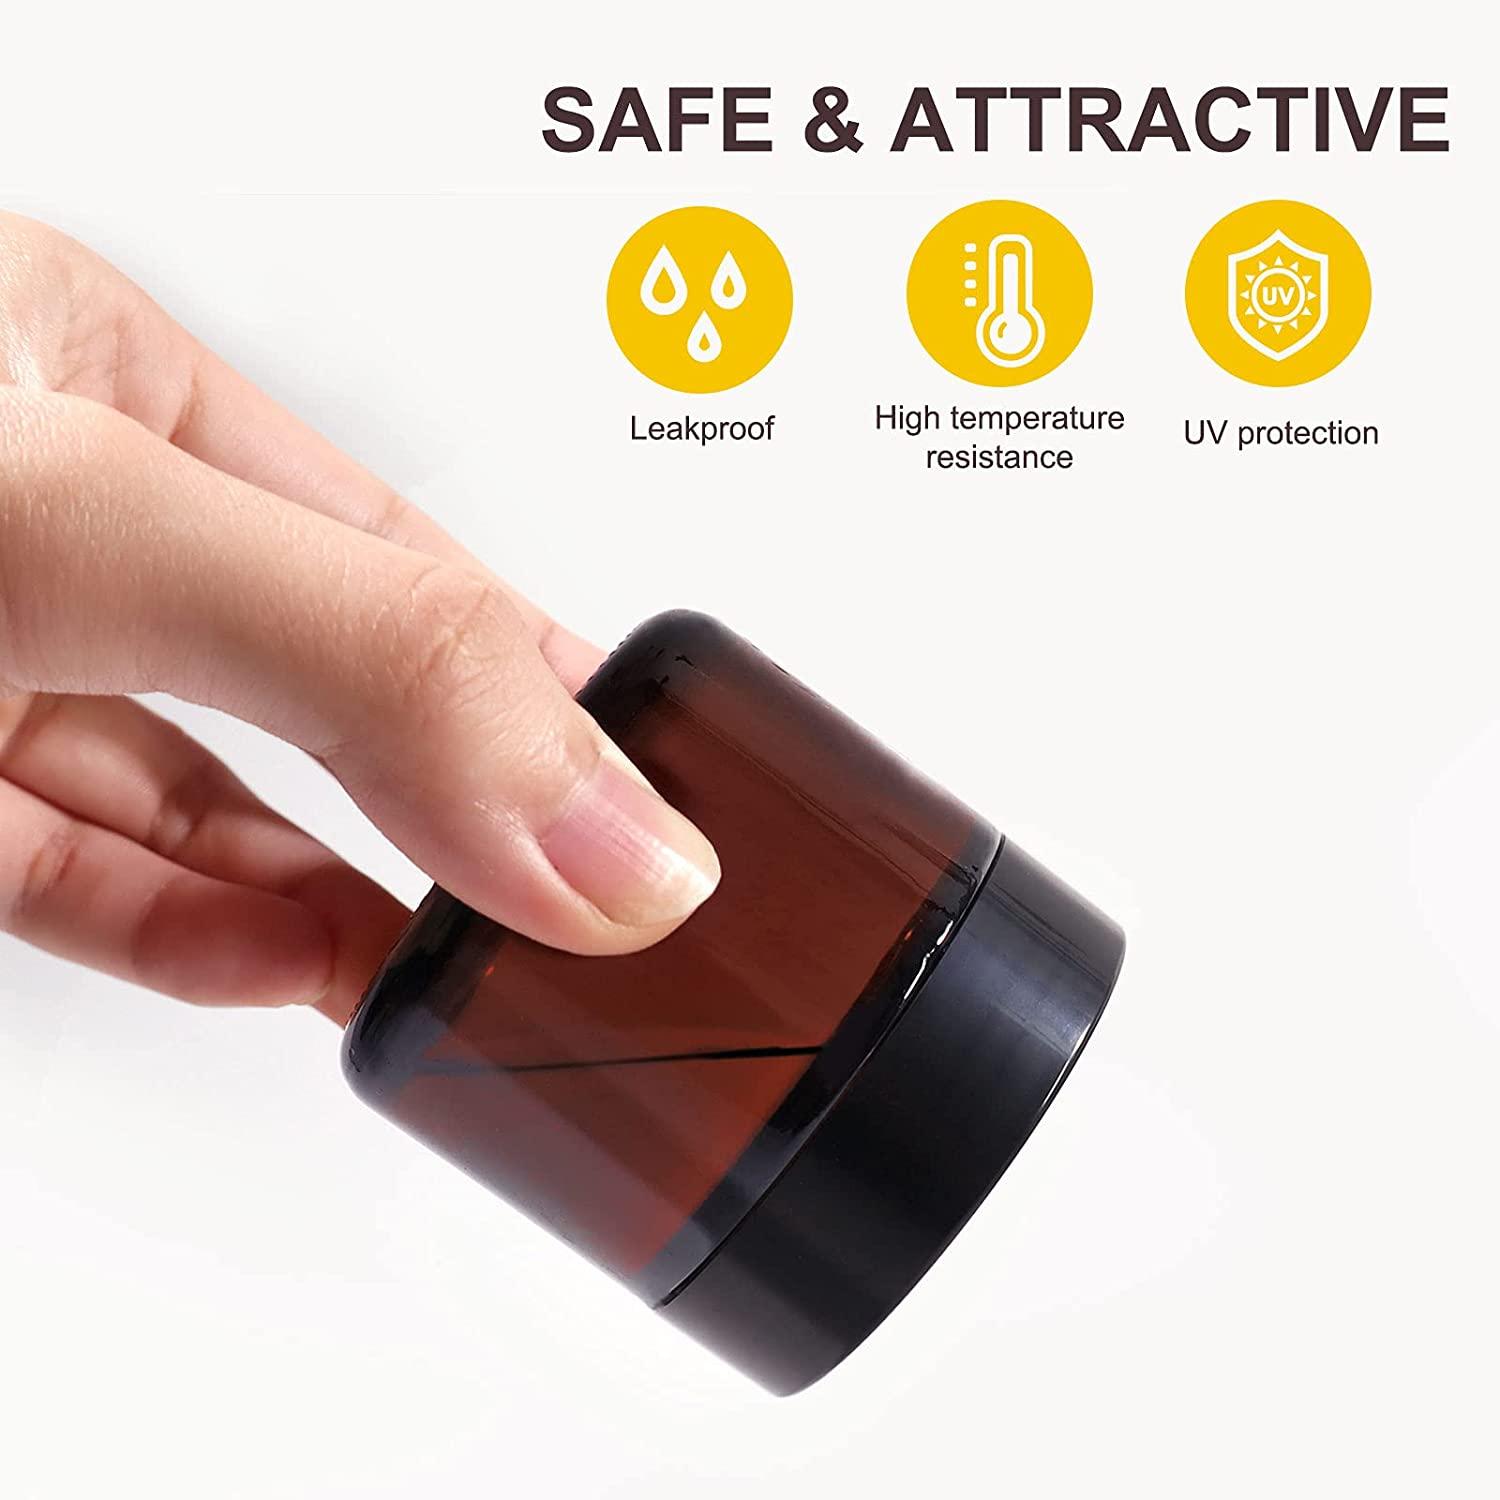 15 gm Amber Glass Jar, For Cream Based Cosmetics